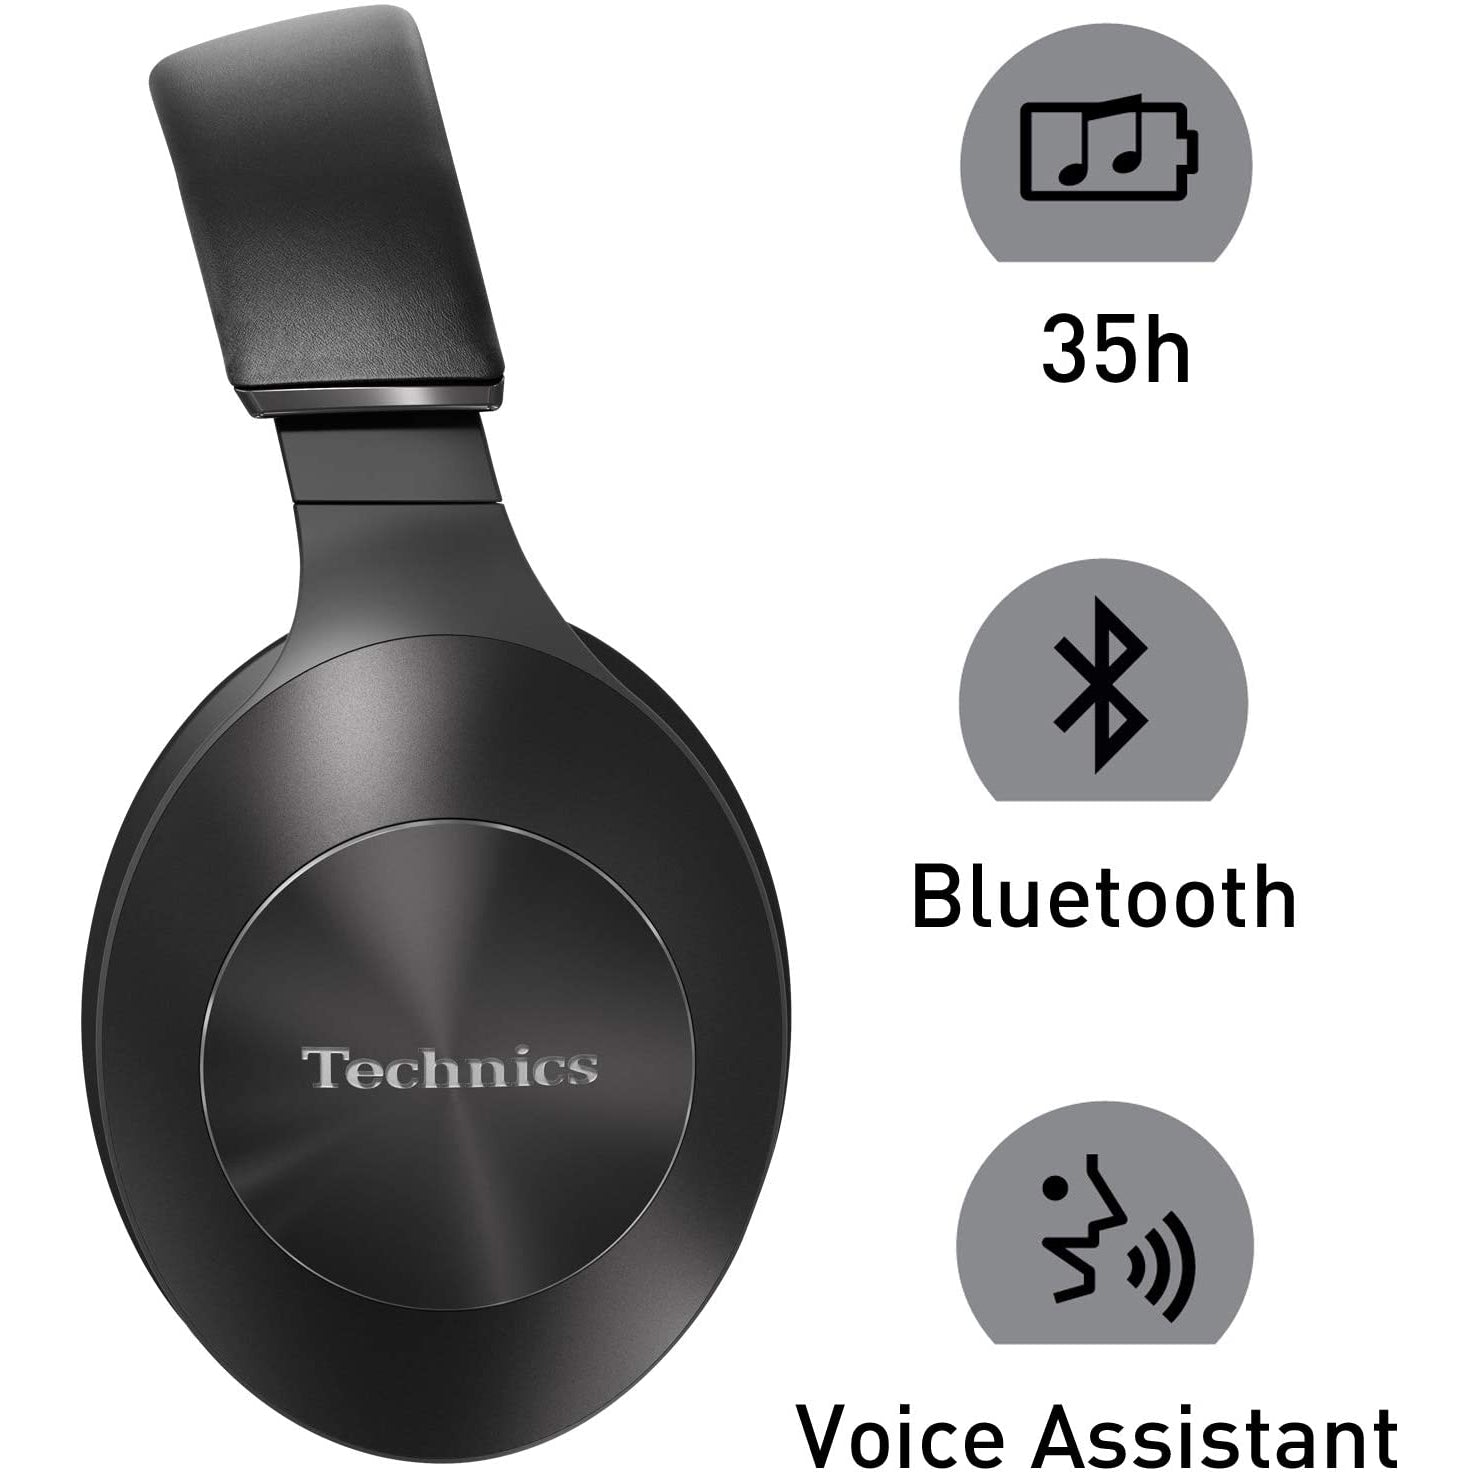 Technics EAH-F50B Wireless Bluetooth High Resolution Over-Ear Headphones - Black